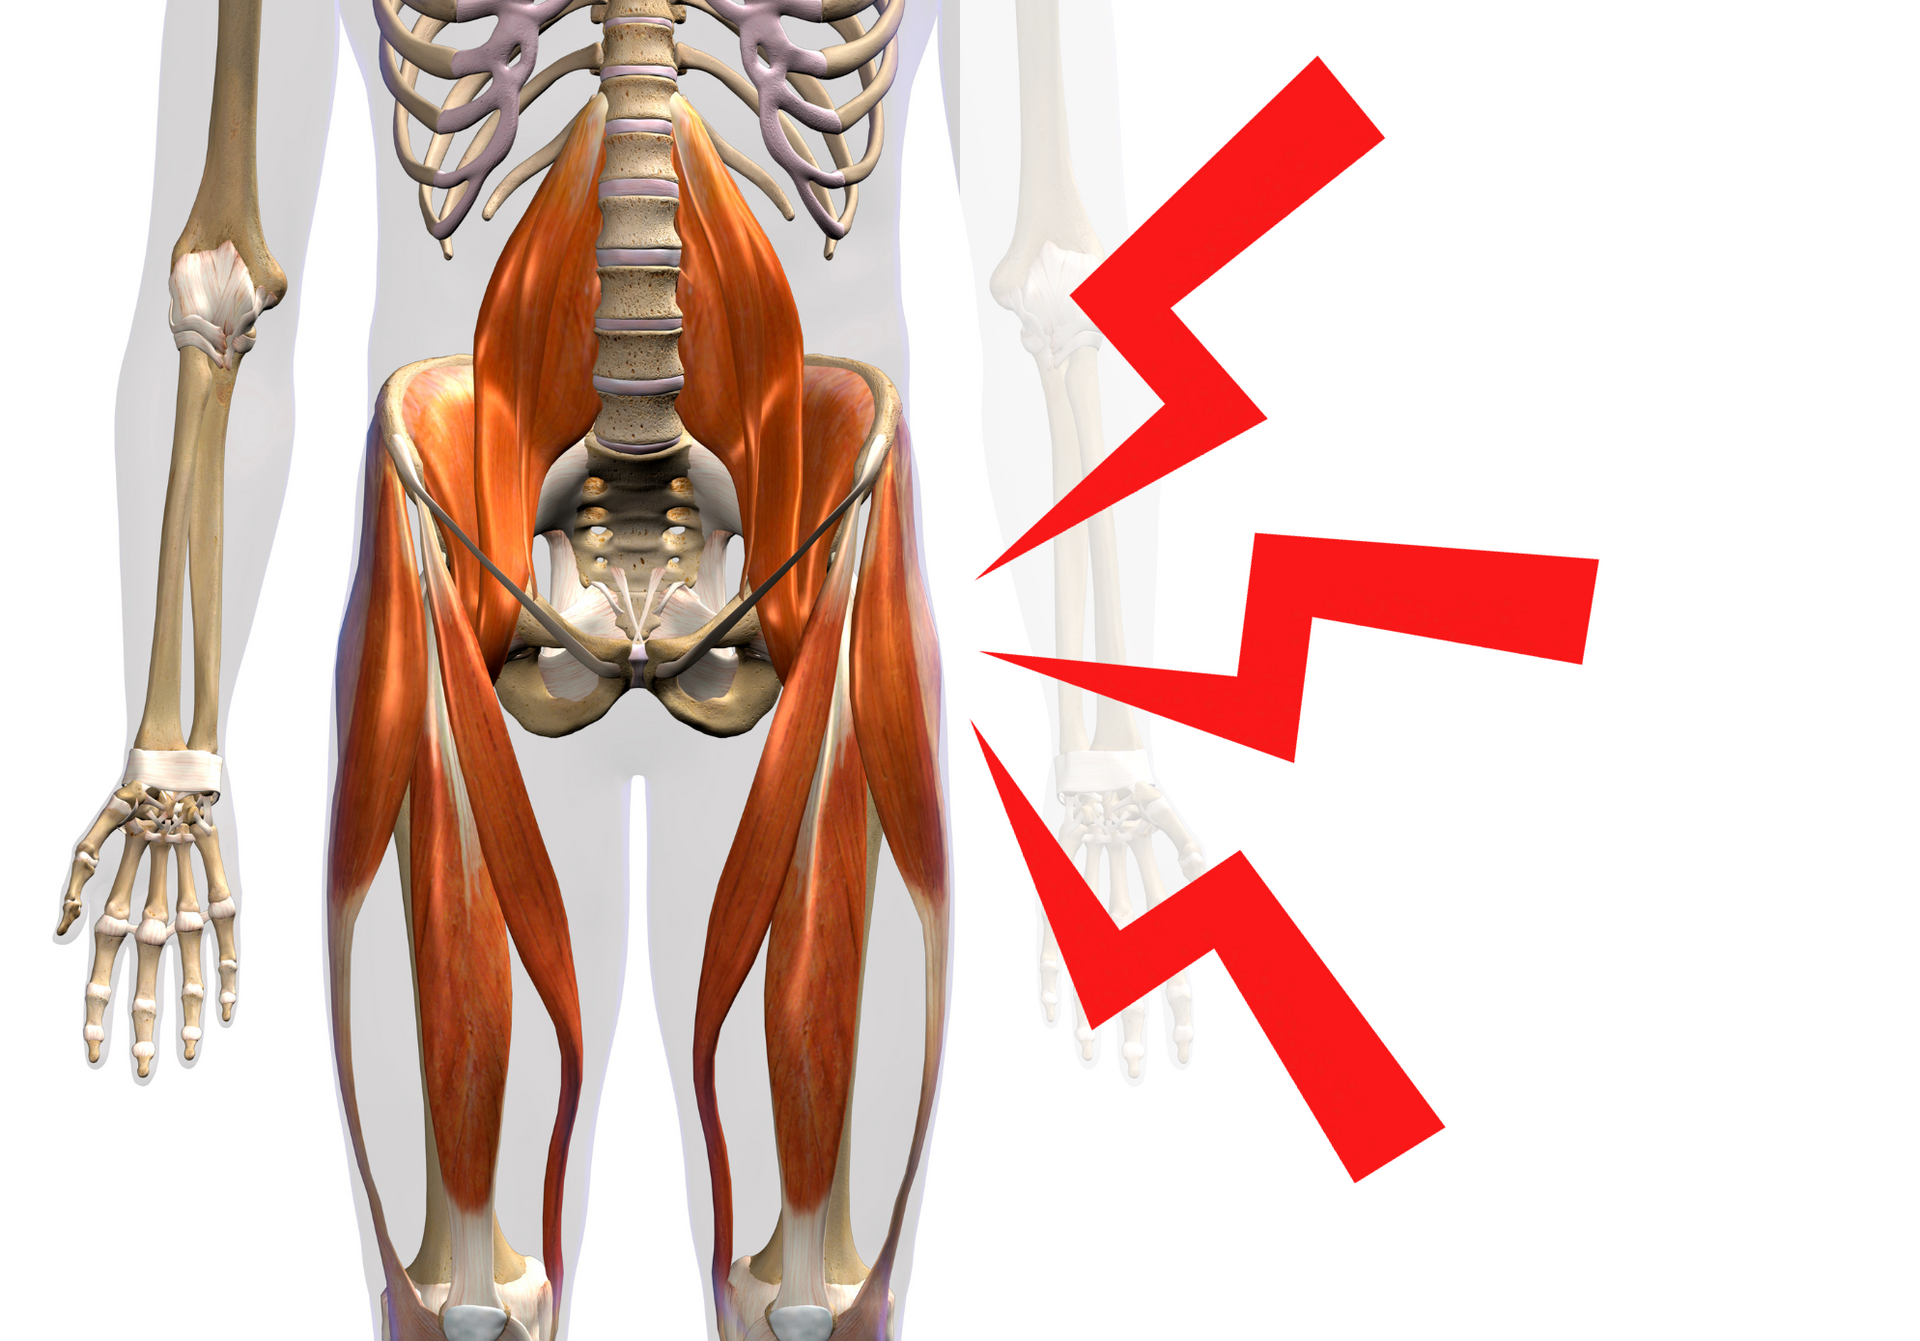 Hip Strain, Symptoms & Treatment for Hip Flexor Strains